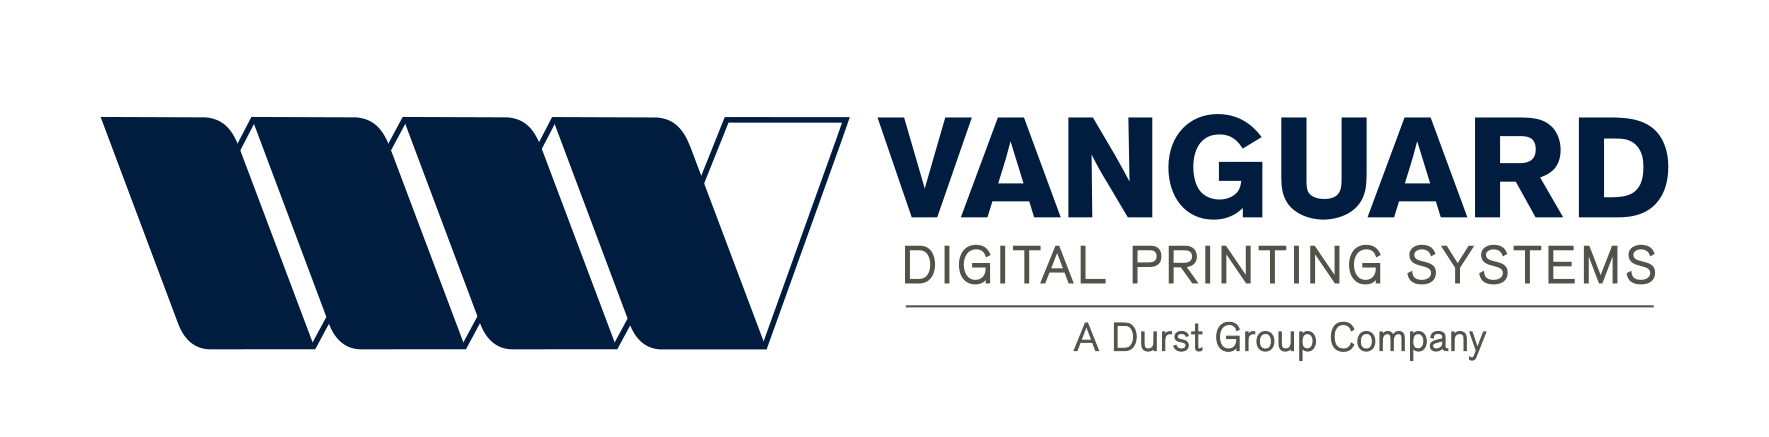 Vanguard Digital Printing Systems